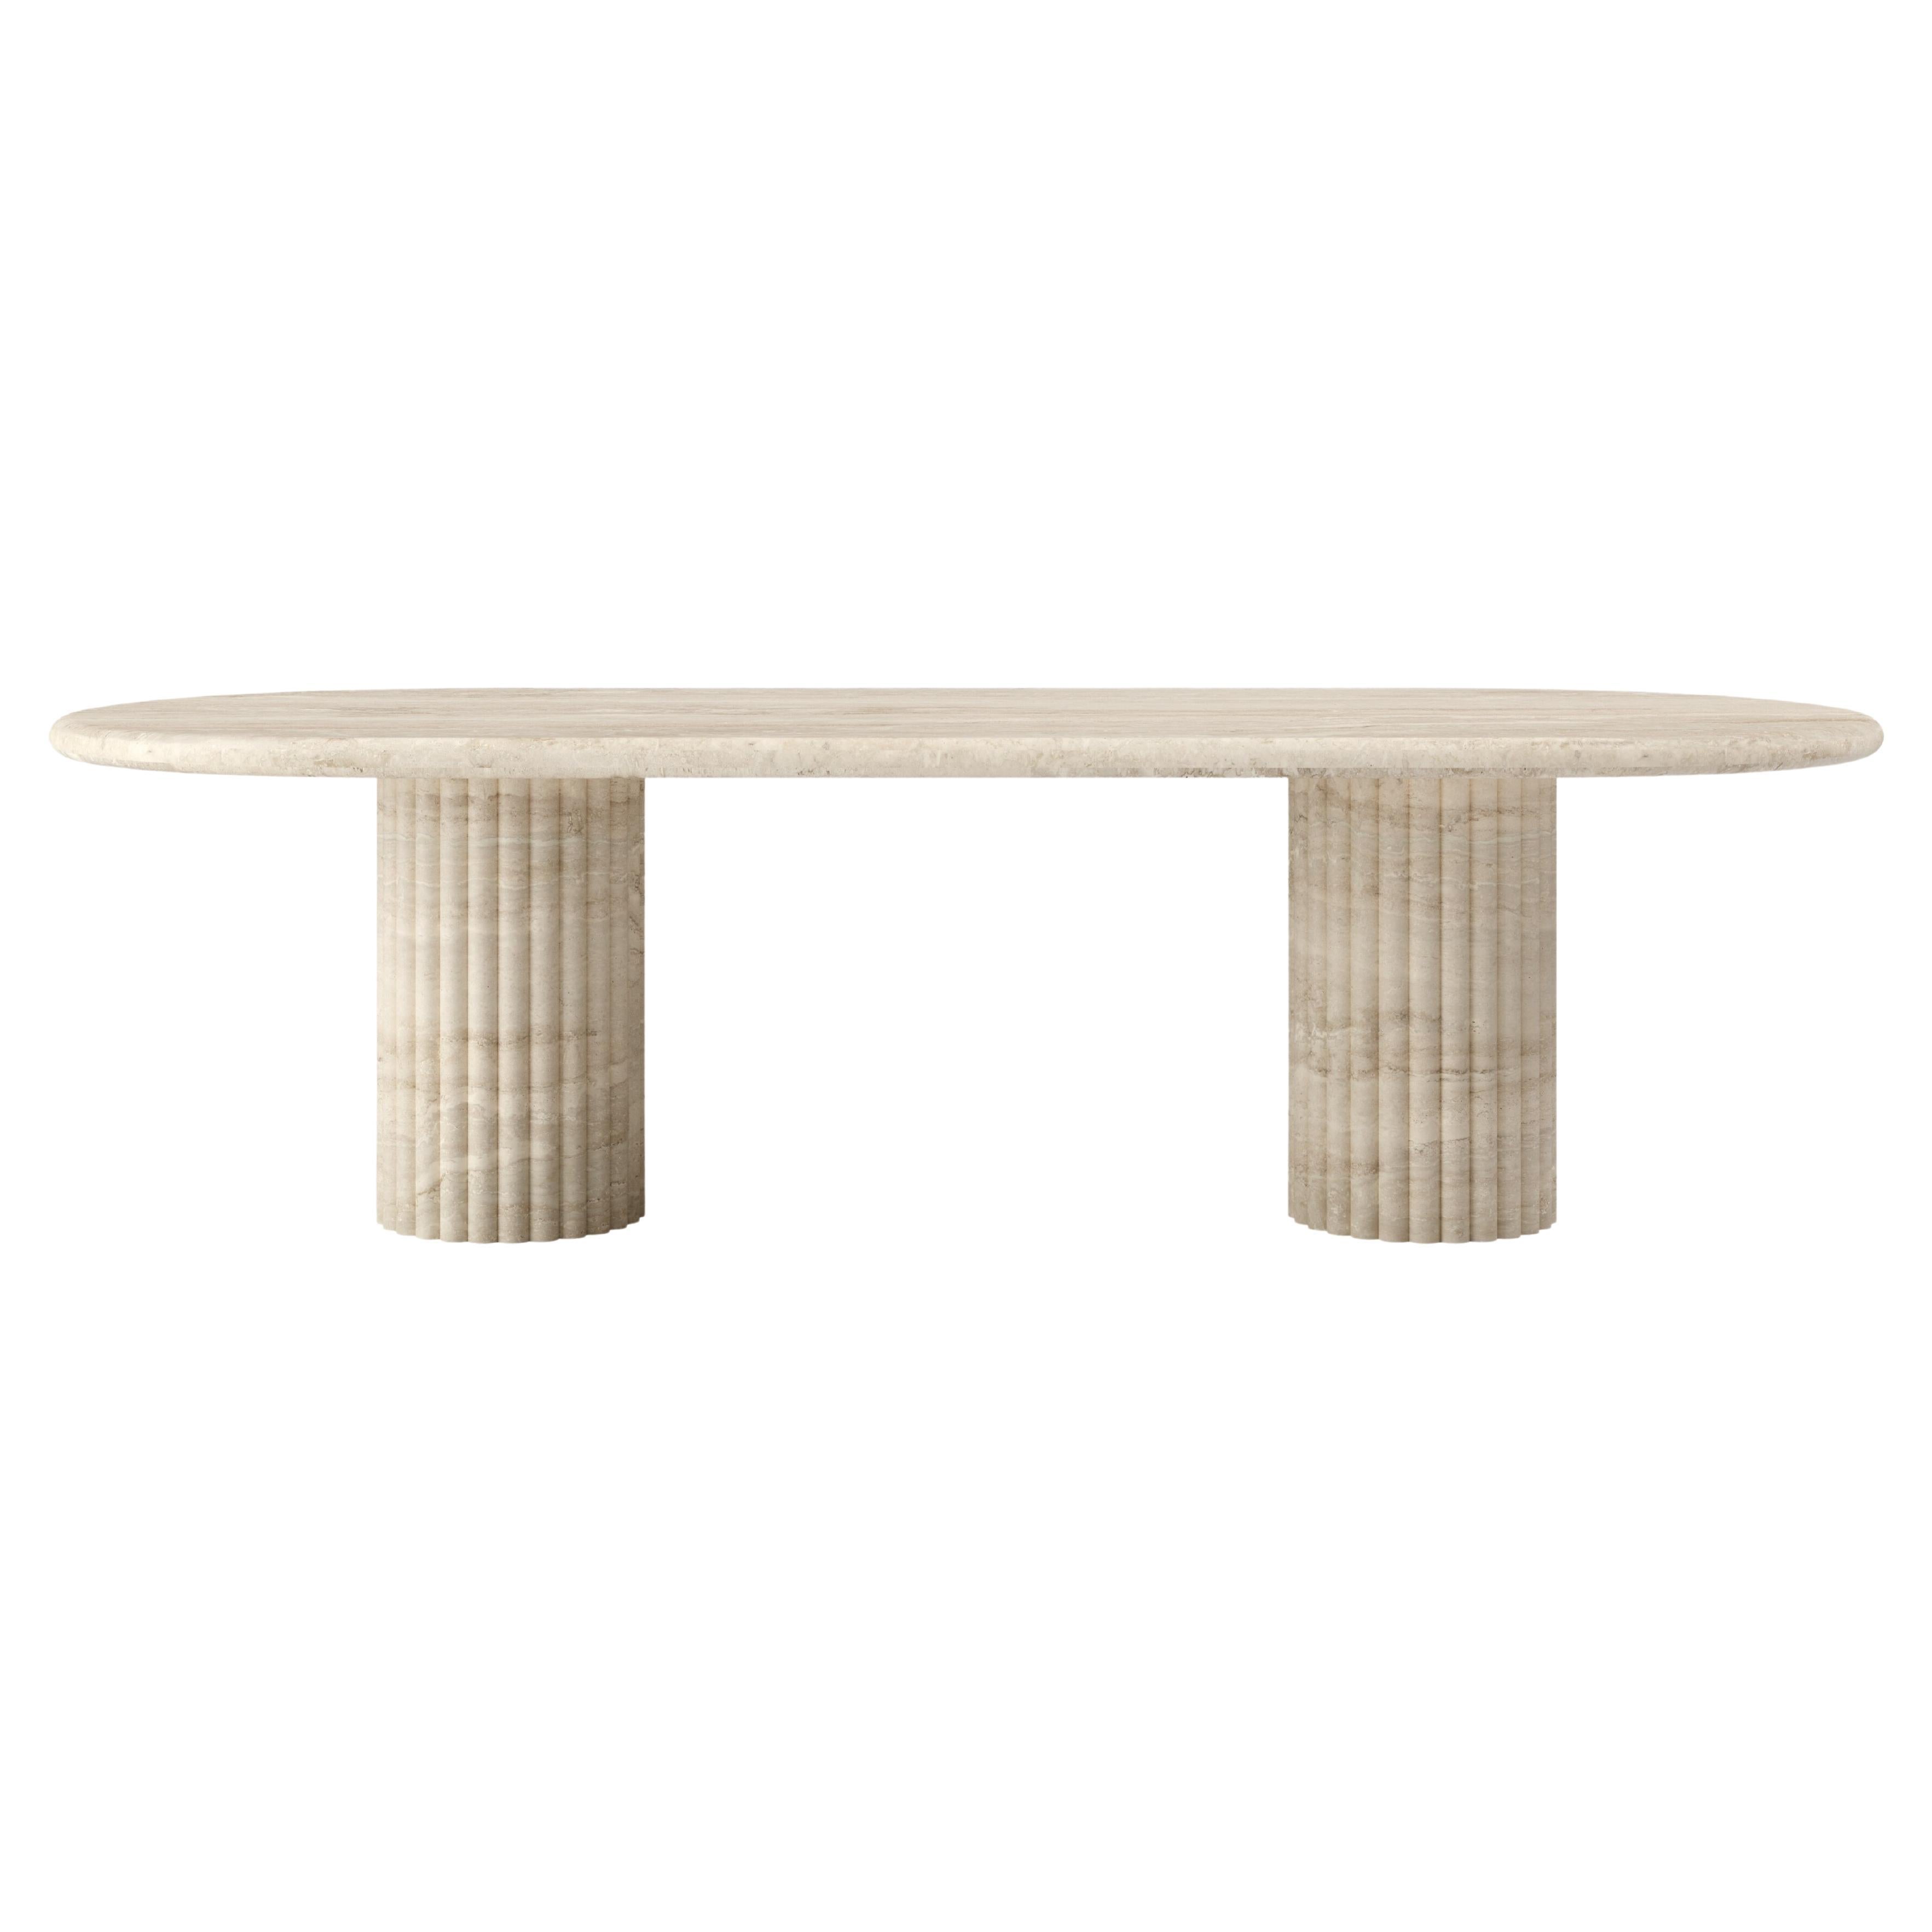 FORM(LA) Fluta Oval Dining Table 108”L x 48”W x 30”H Travertino Navona VC